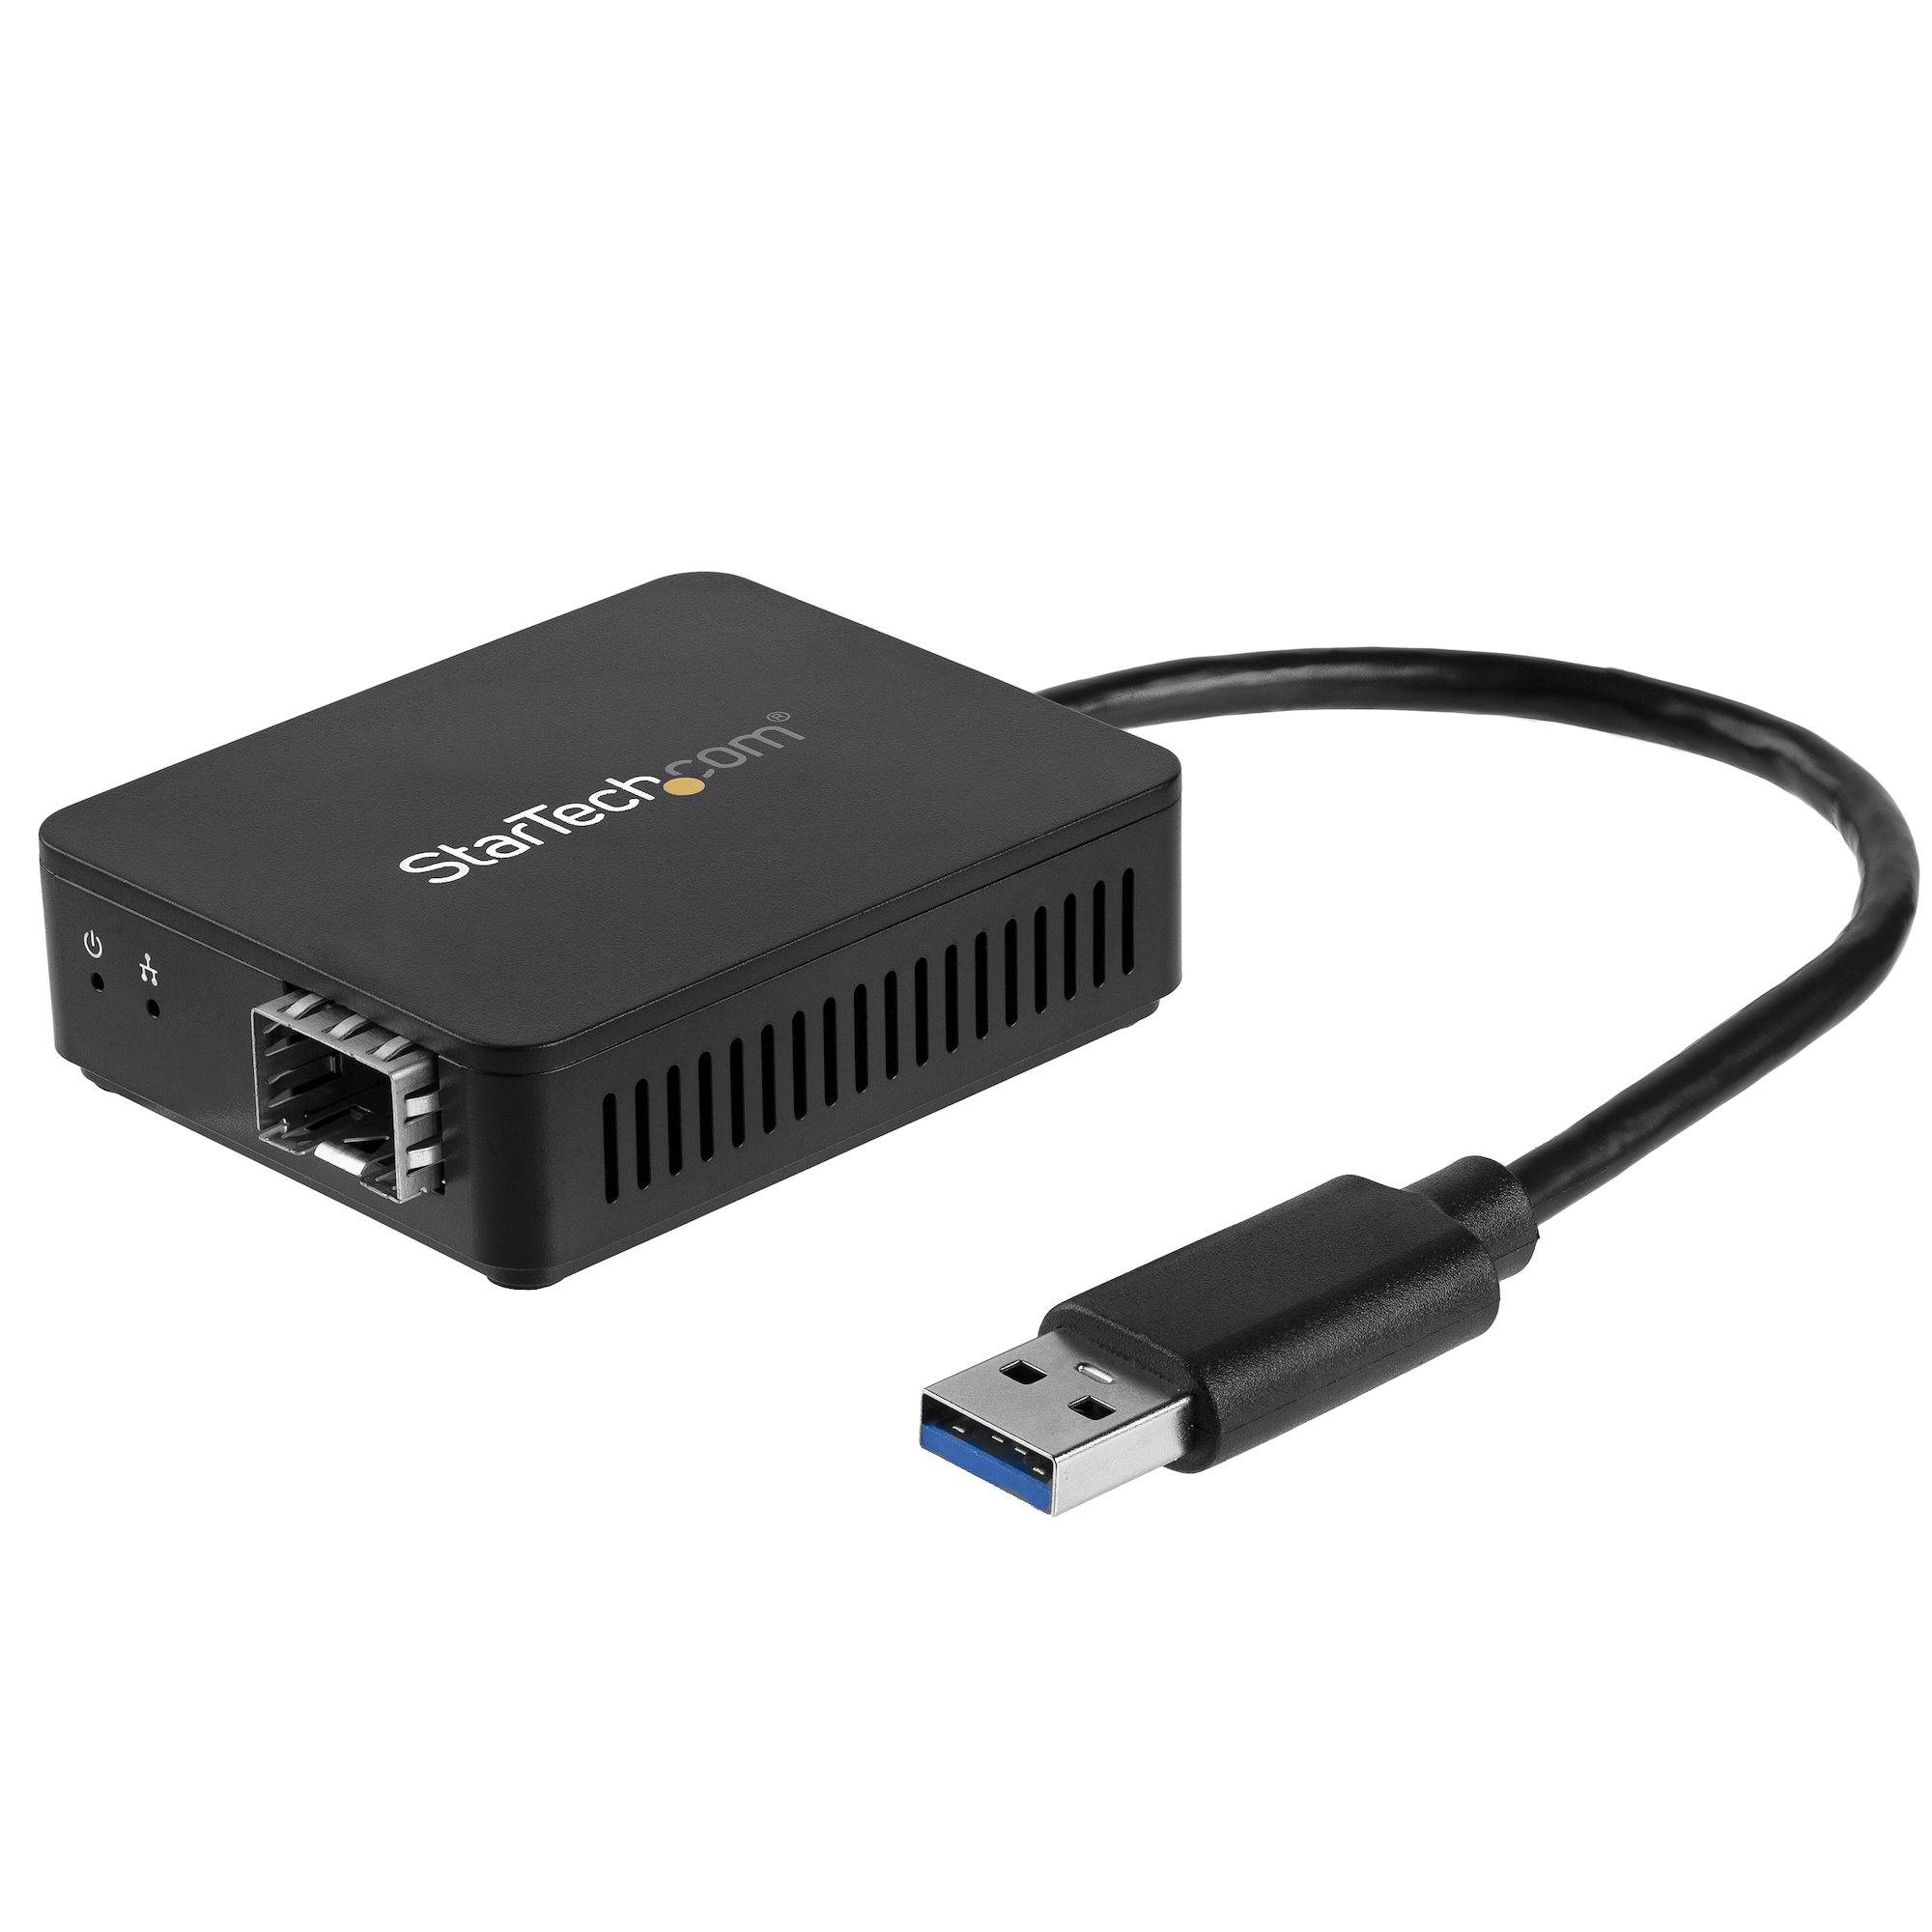 Rca Informatique - Image du produit : USB TO FIBER OPTIC CONVERTER USB 3.0-OPEN SFP 1000BASE-SX/LX